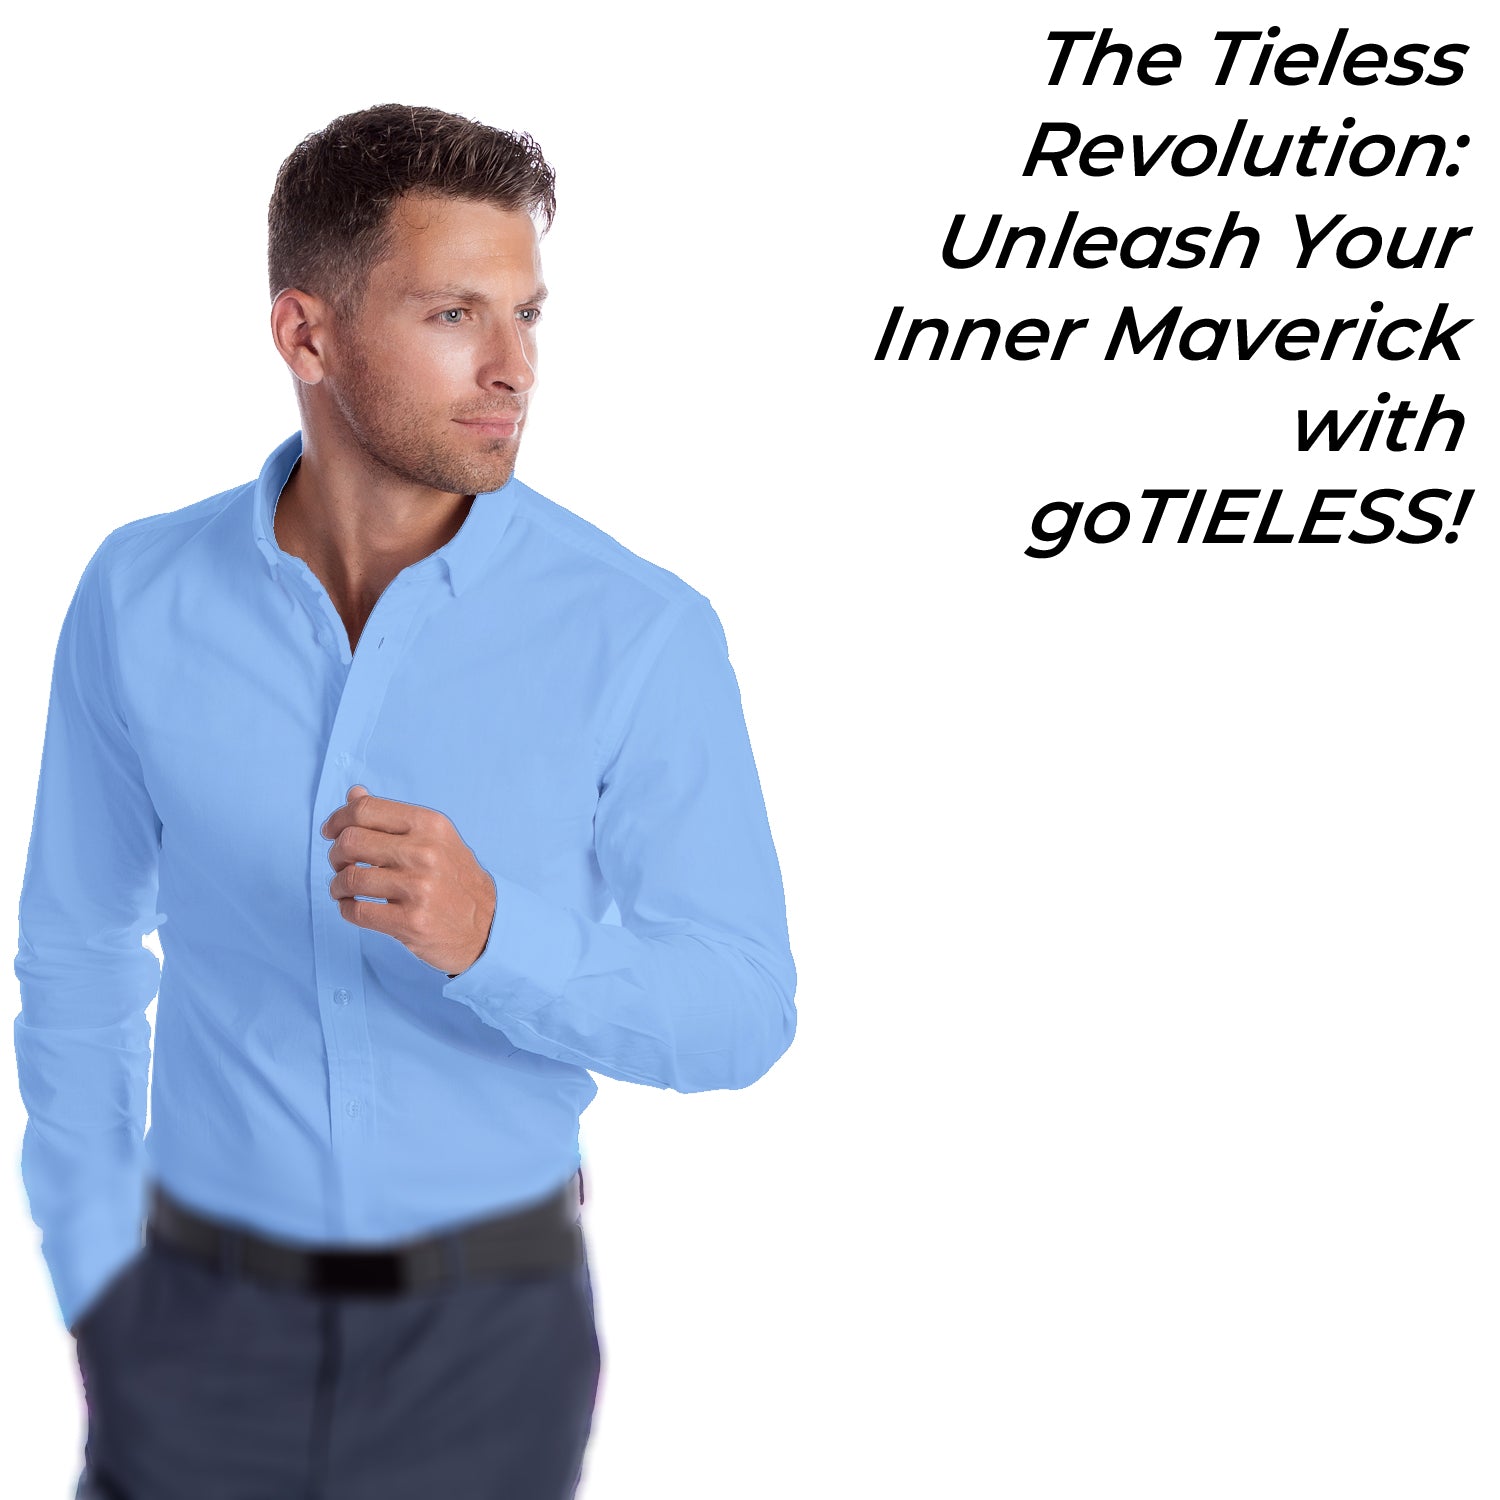 The Tieless Revolution: Unleash Your Inner Maverick with goTIELESS!